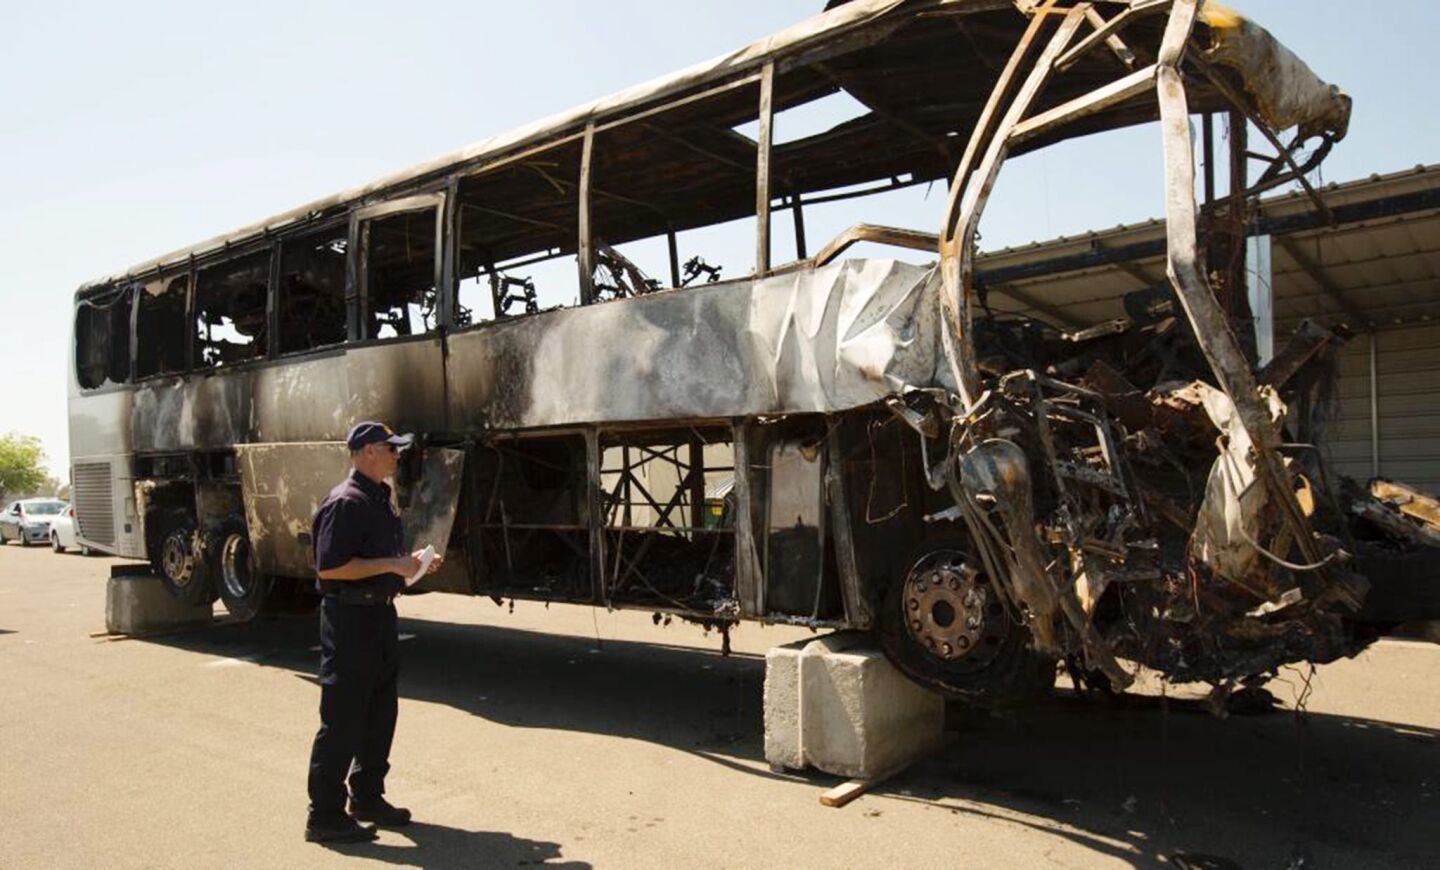 Bus crash wreckage